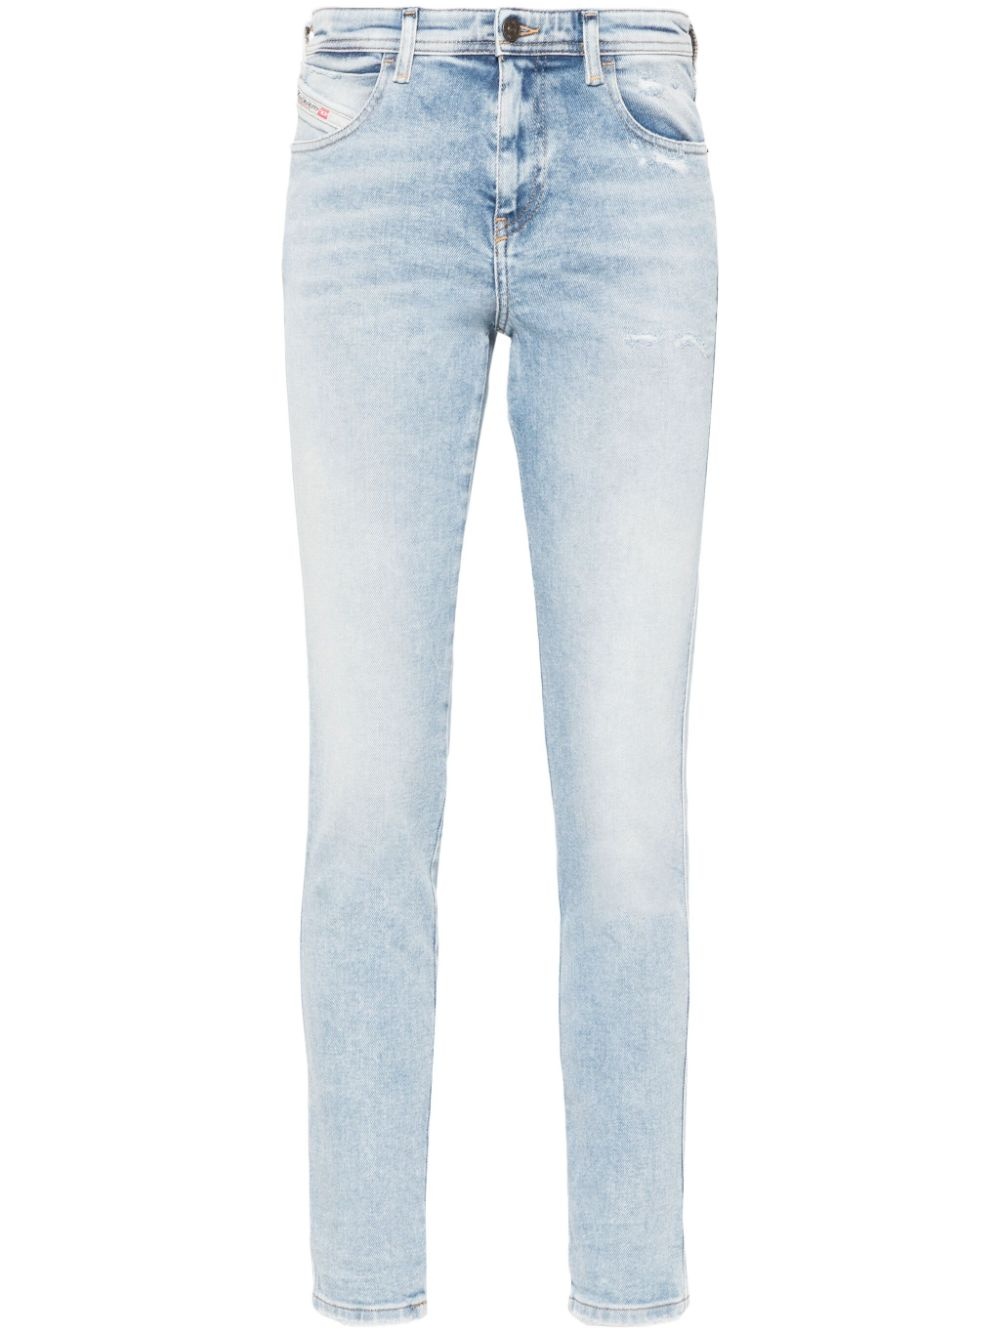 2015 Babhila mid-rise jeans - 1